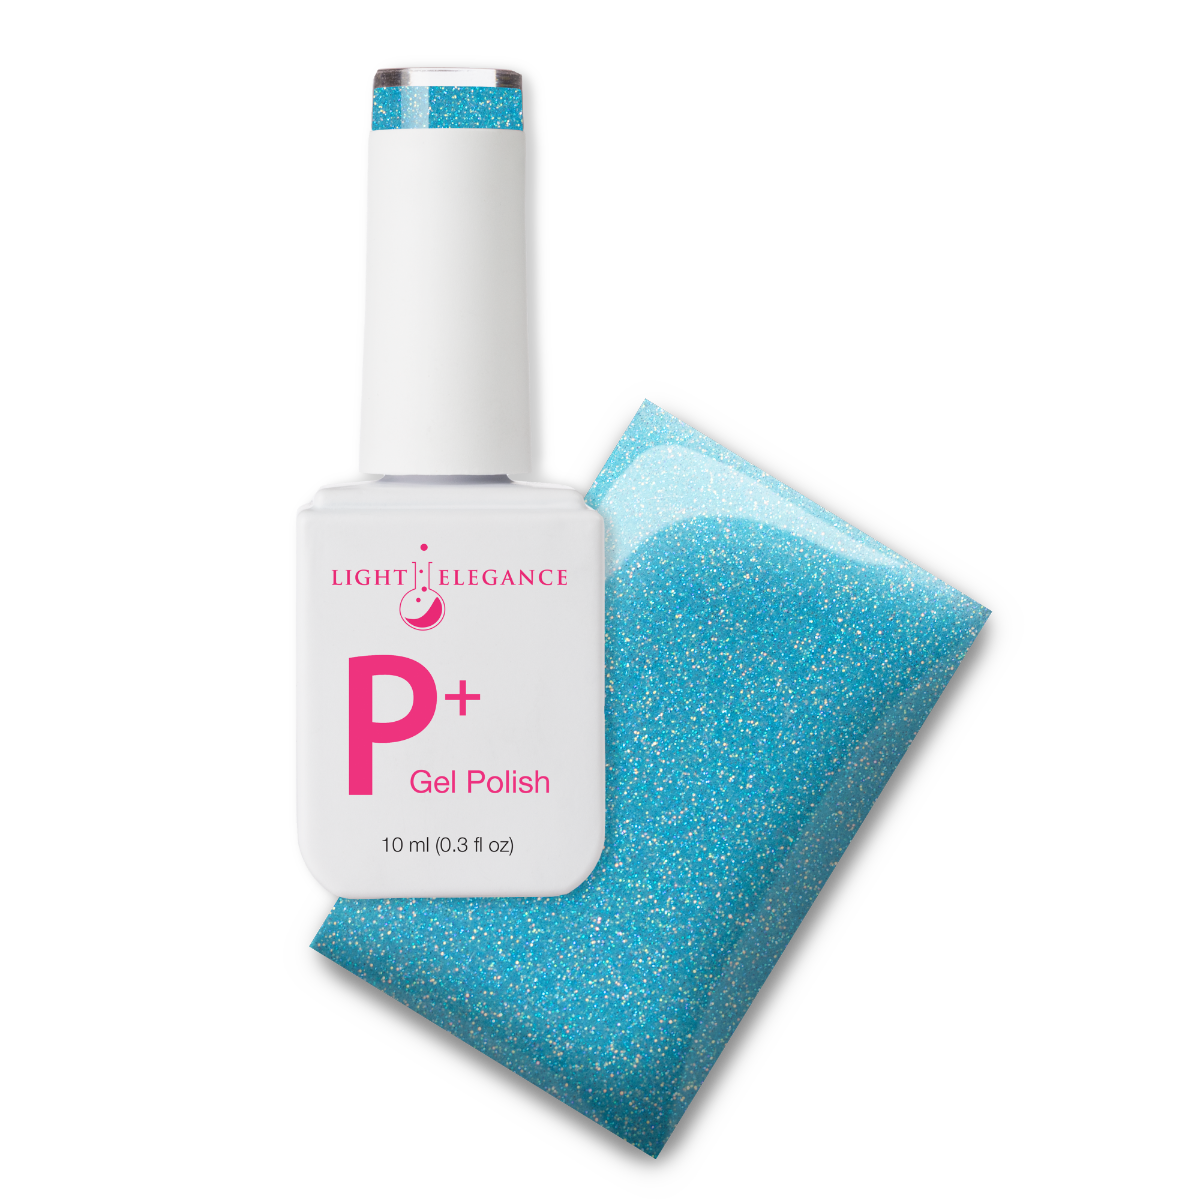 Light Elegance P+ Soak Off Glitter Gel - Stay Cool :: New Packaging